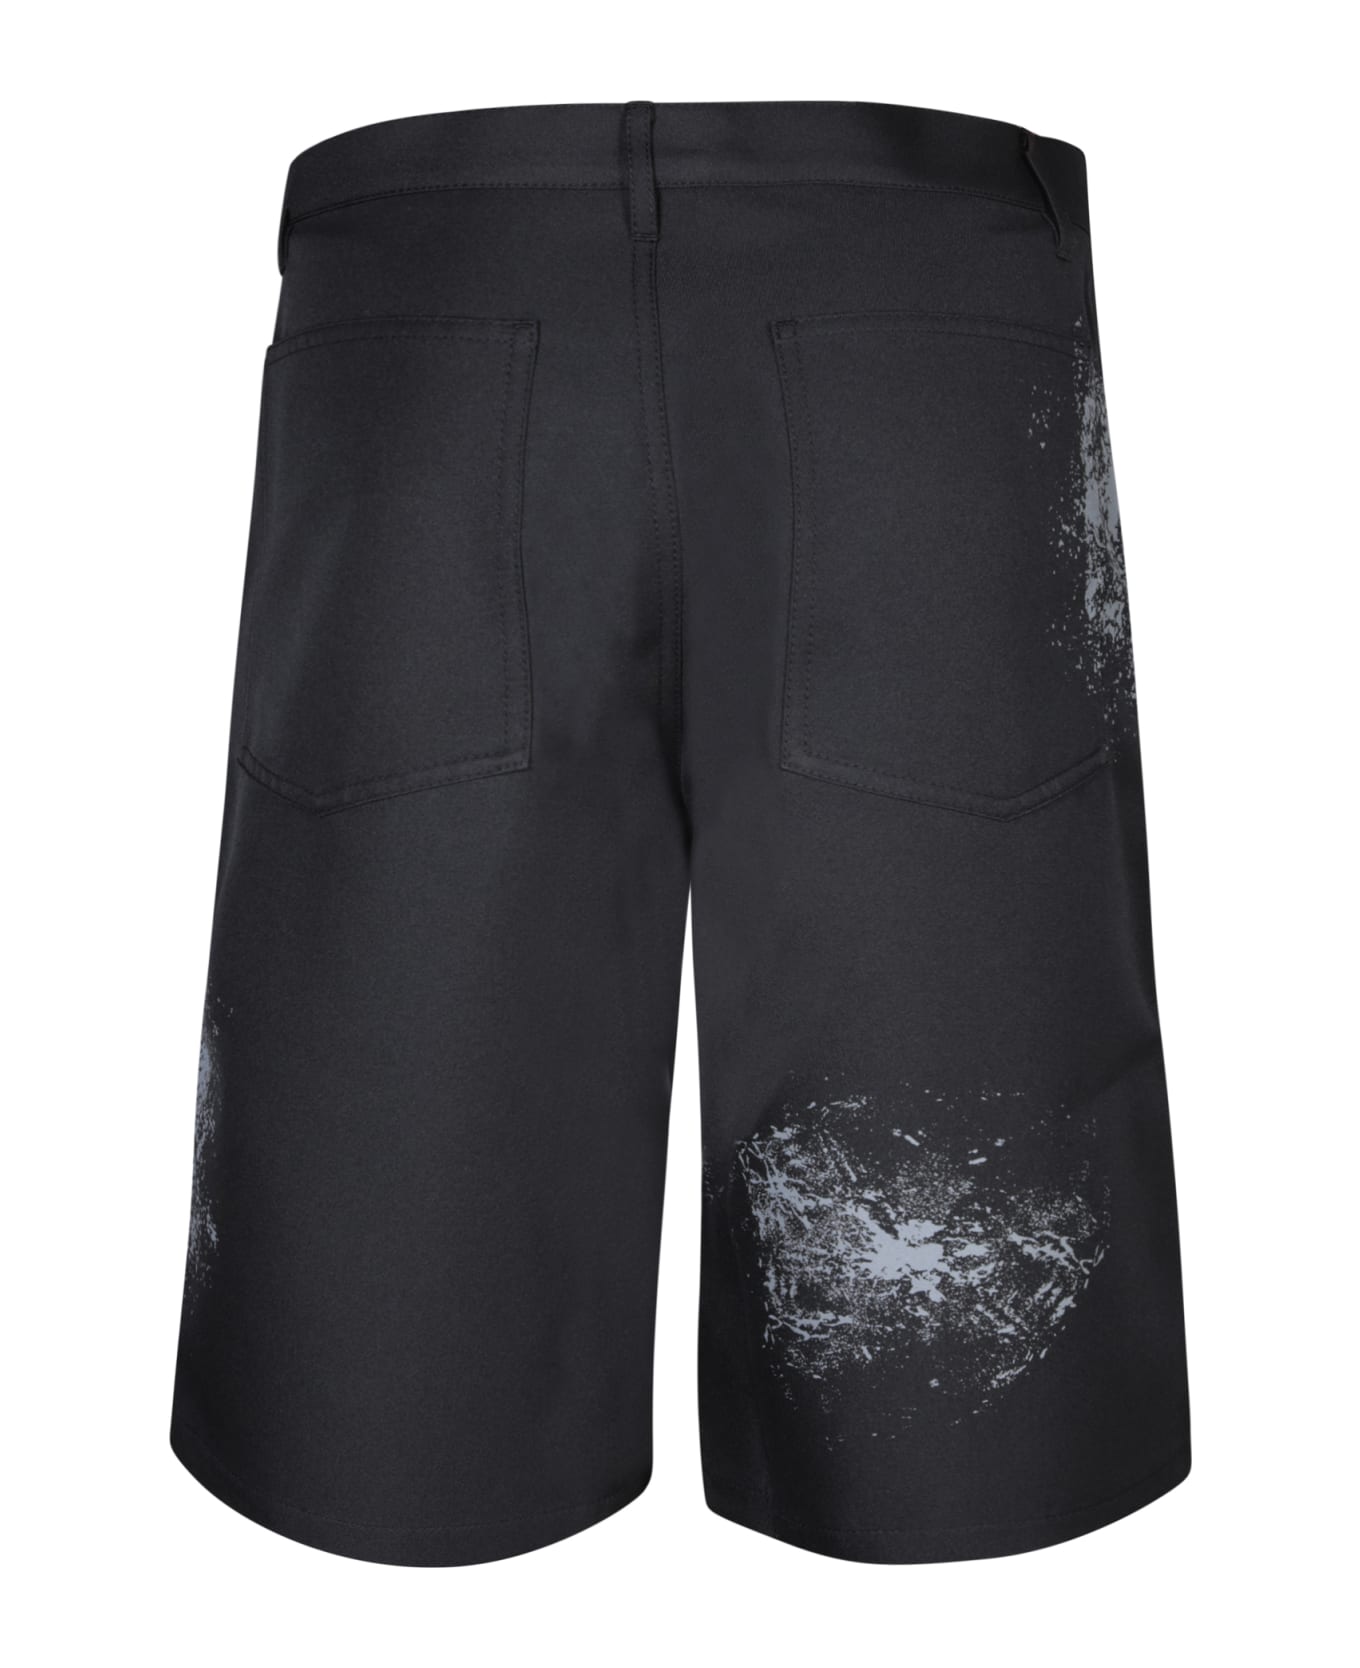 Comme des Garçons Shirt Hand Print Black Bermuda Shorts - Black ショートパンツ